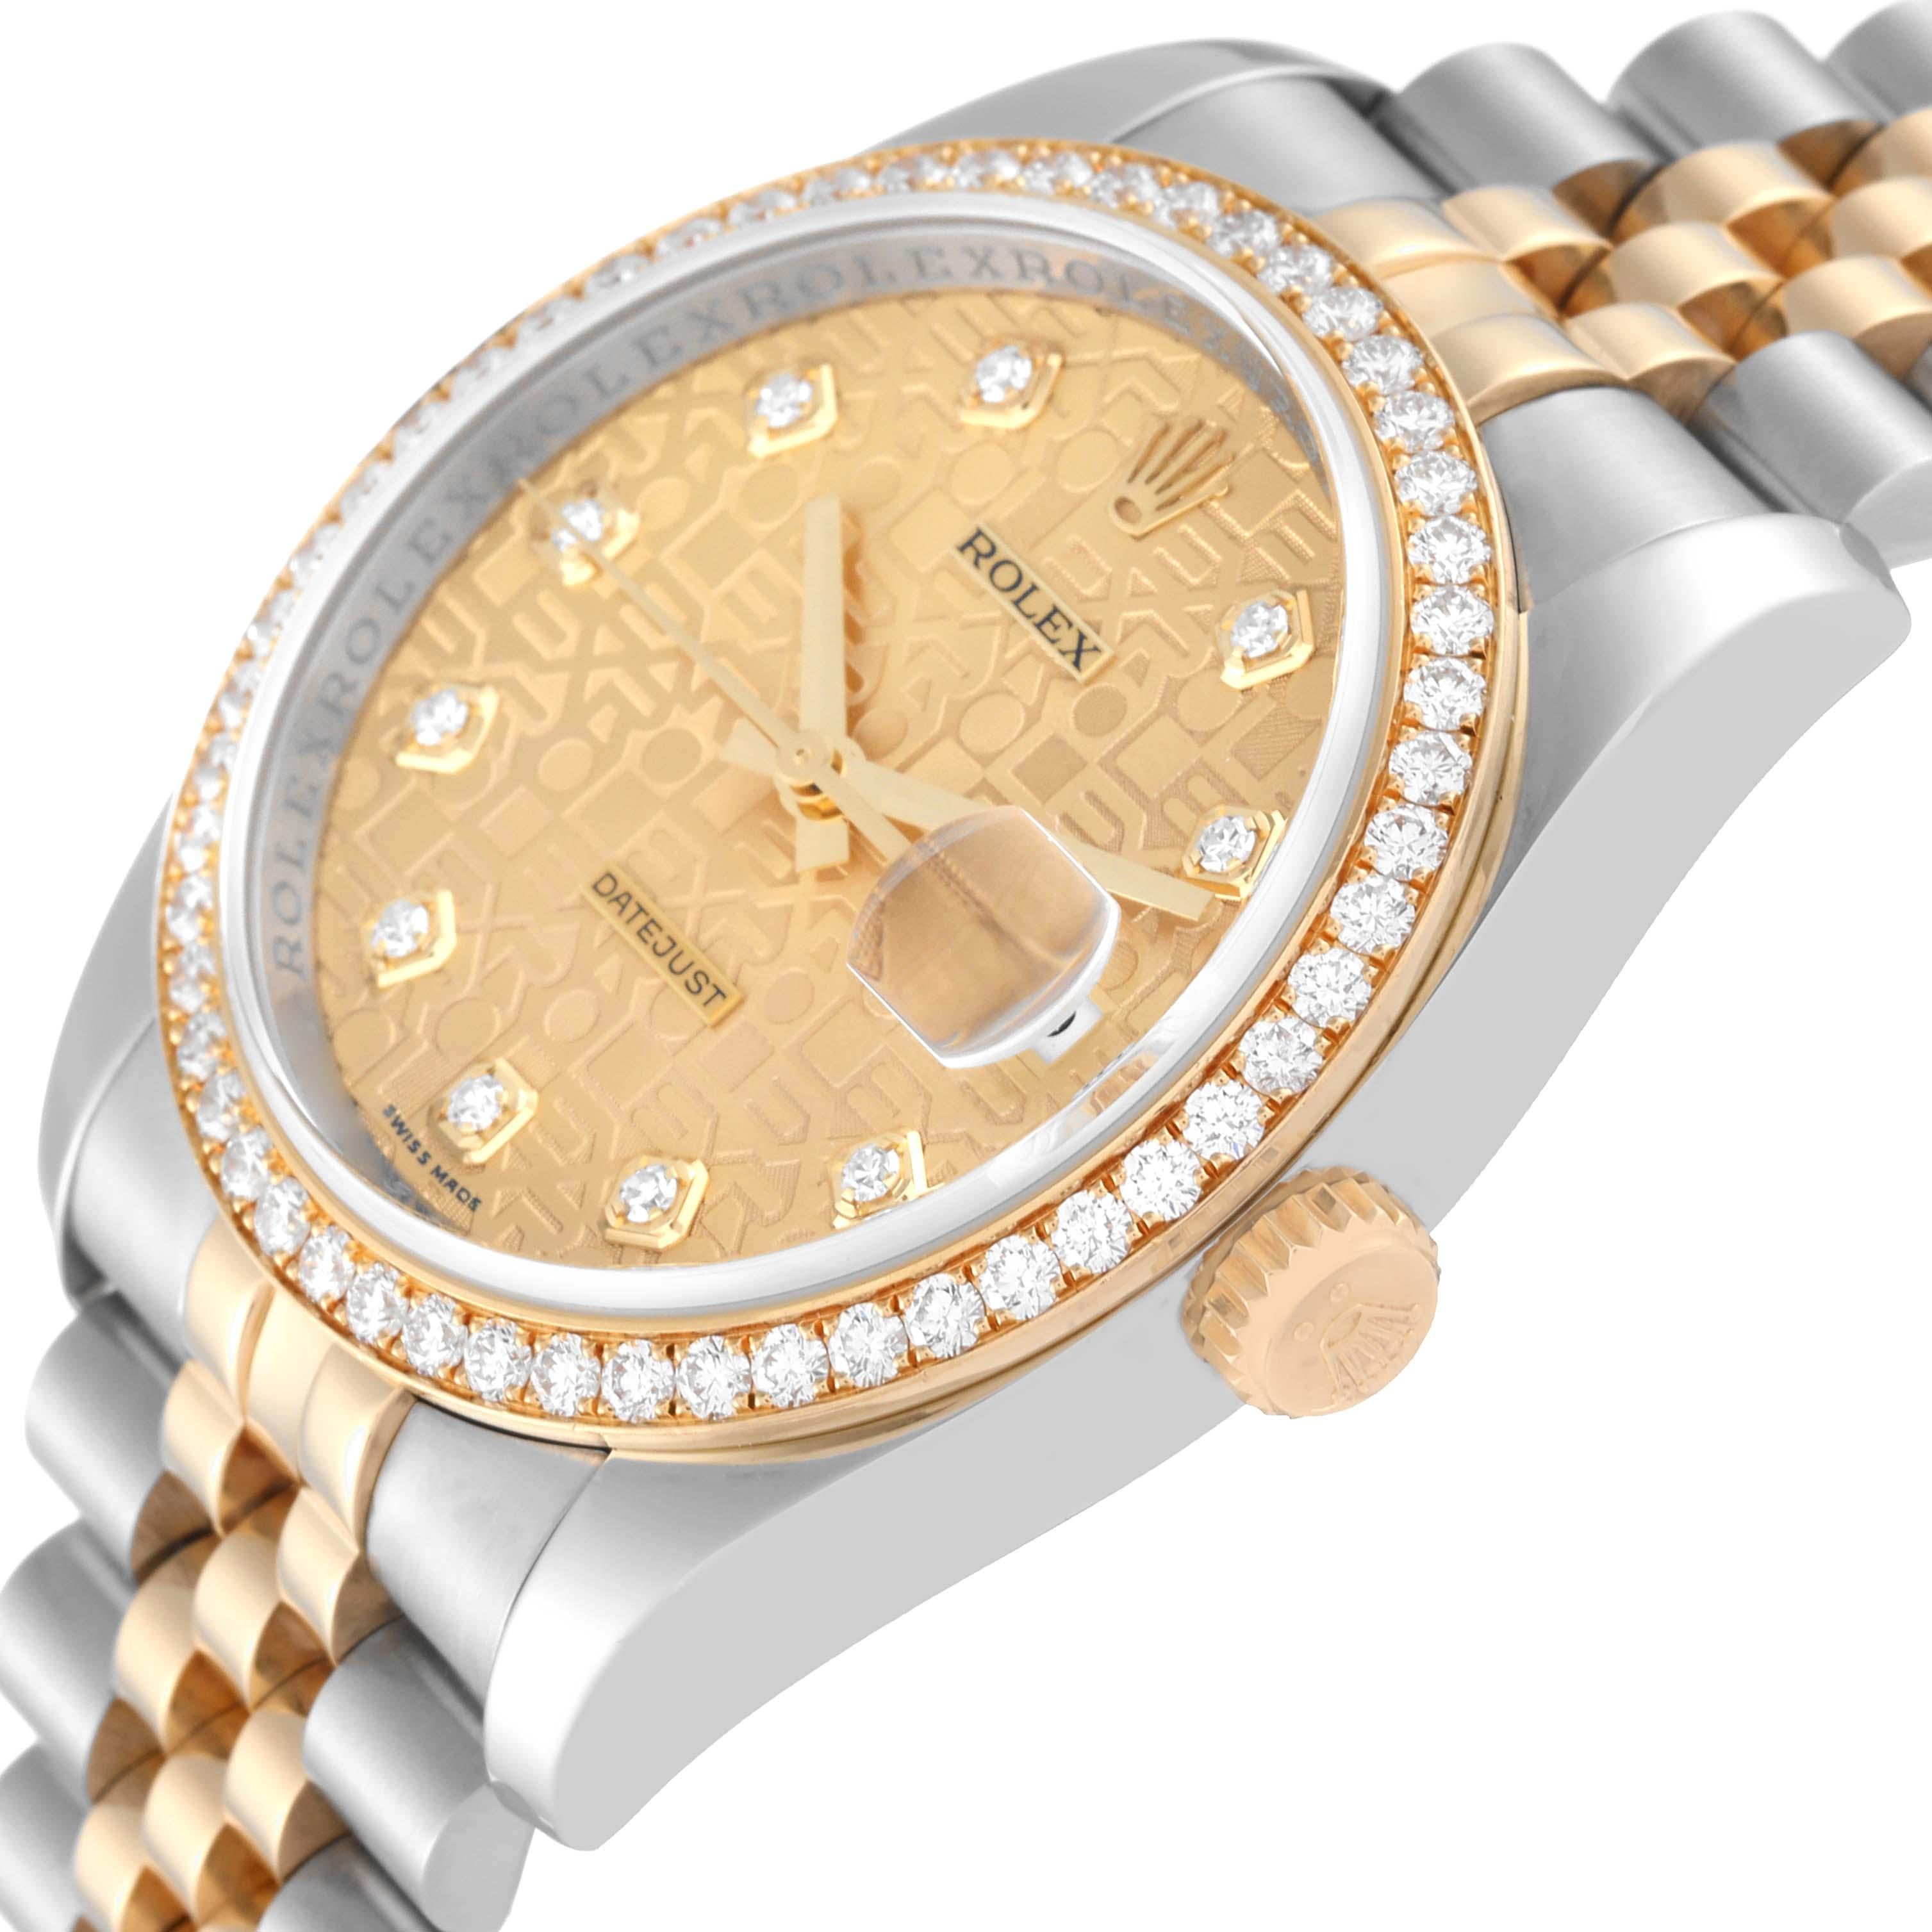 Rolex Datejust Anniversary Dial Steel Yellow Gold Diamond Men's Watch 116243 For Sale 2